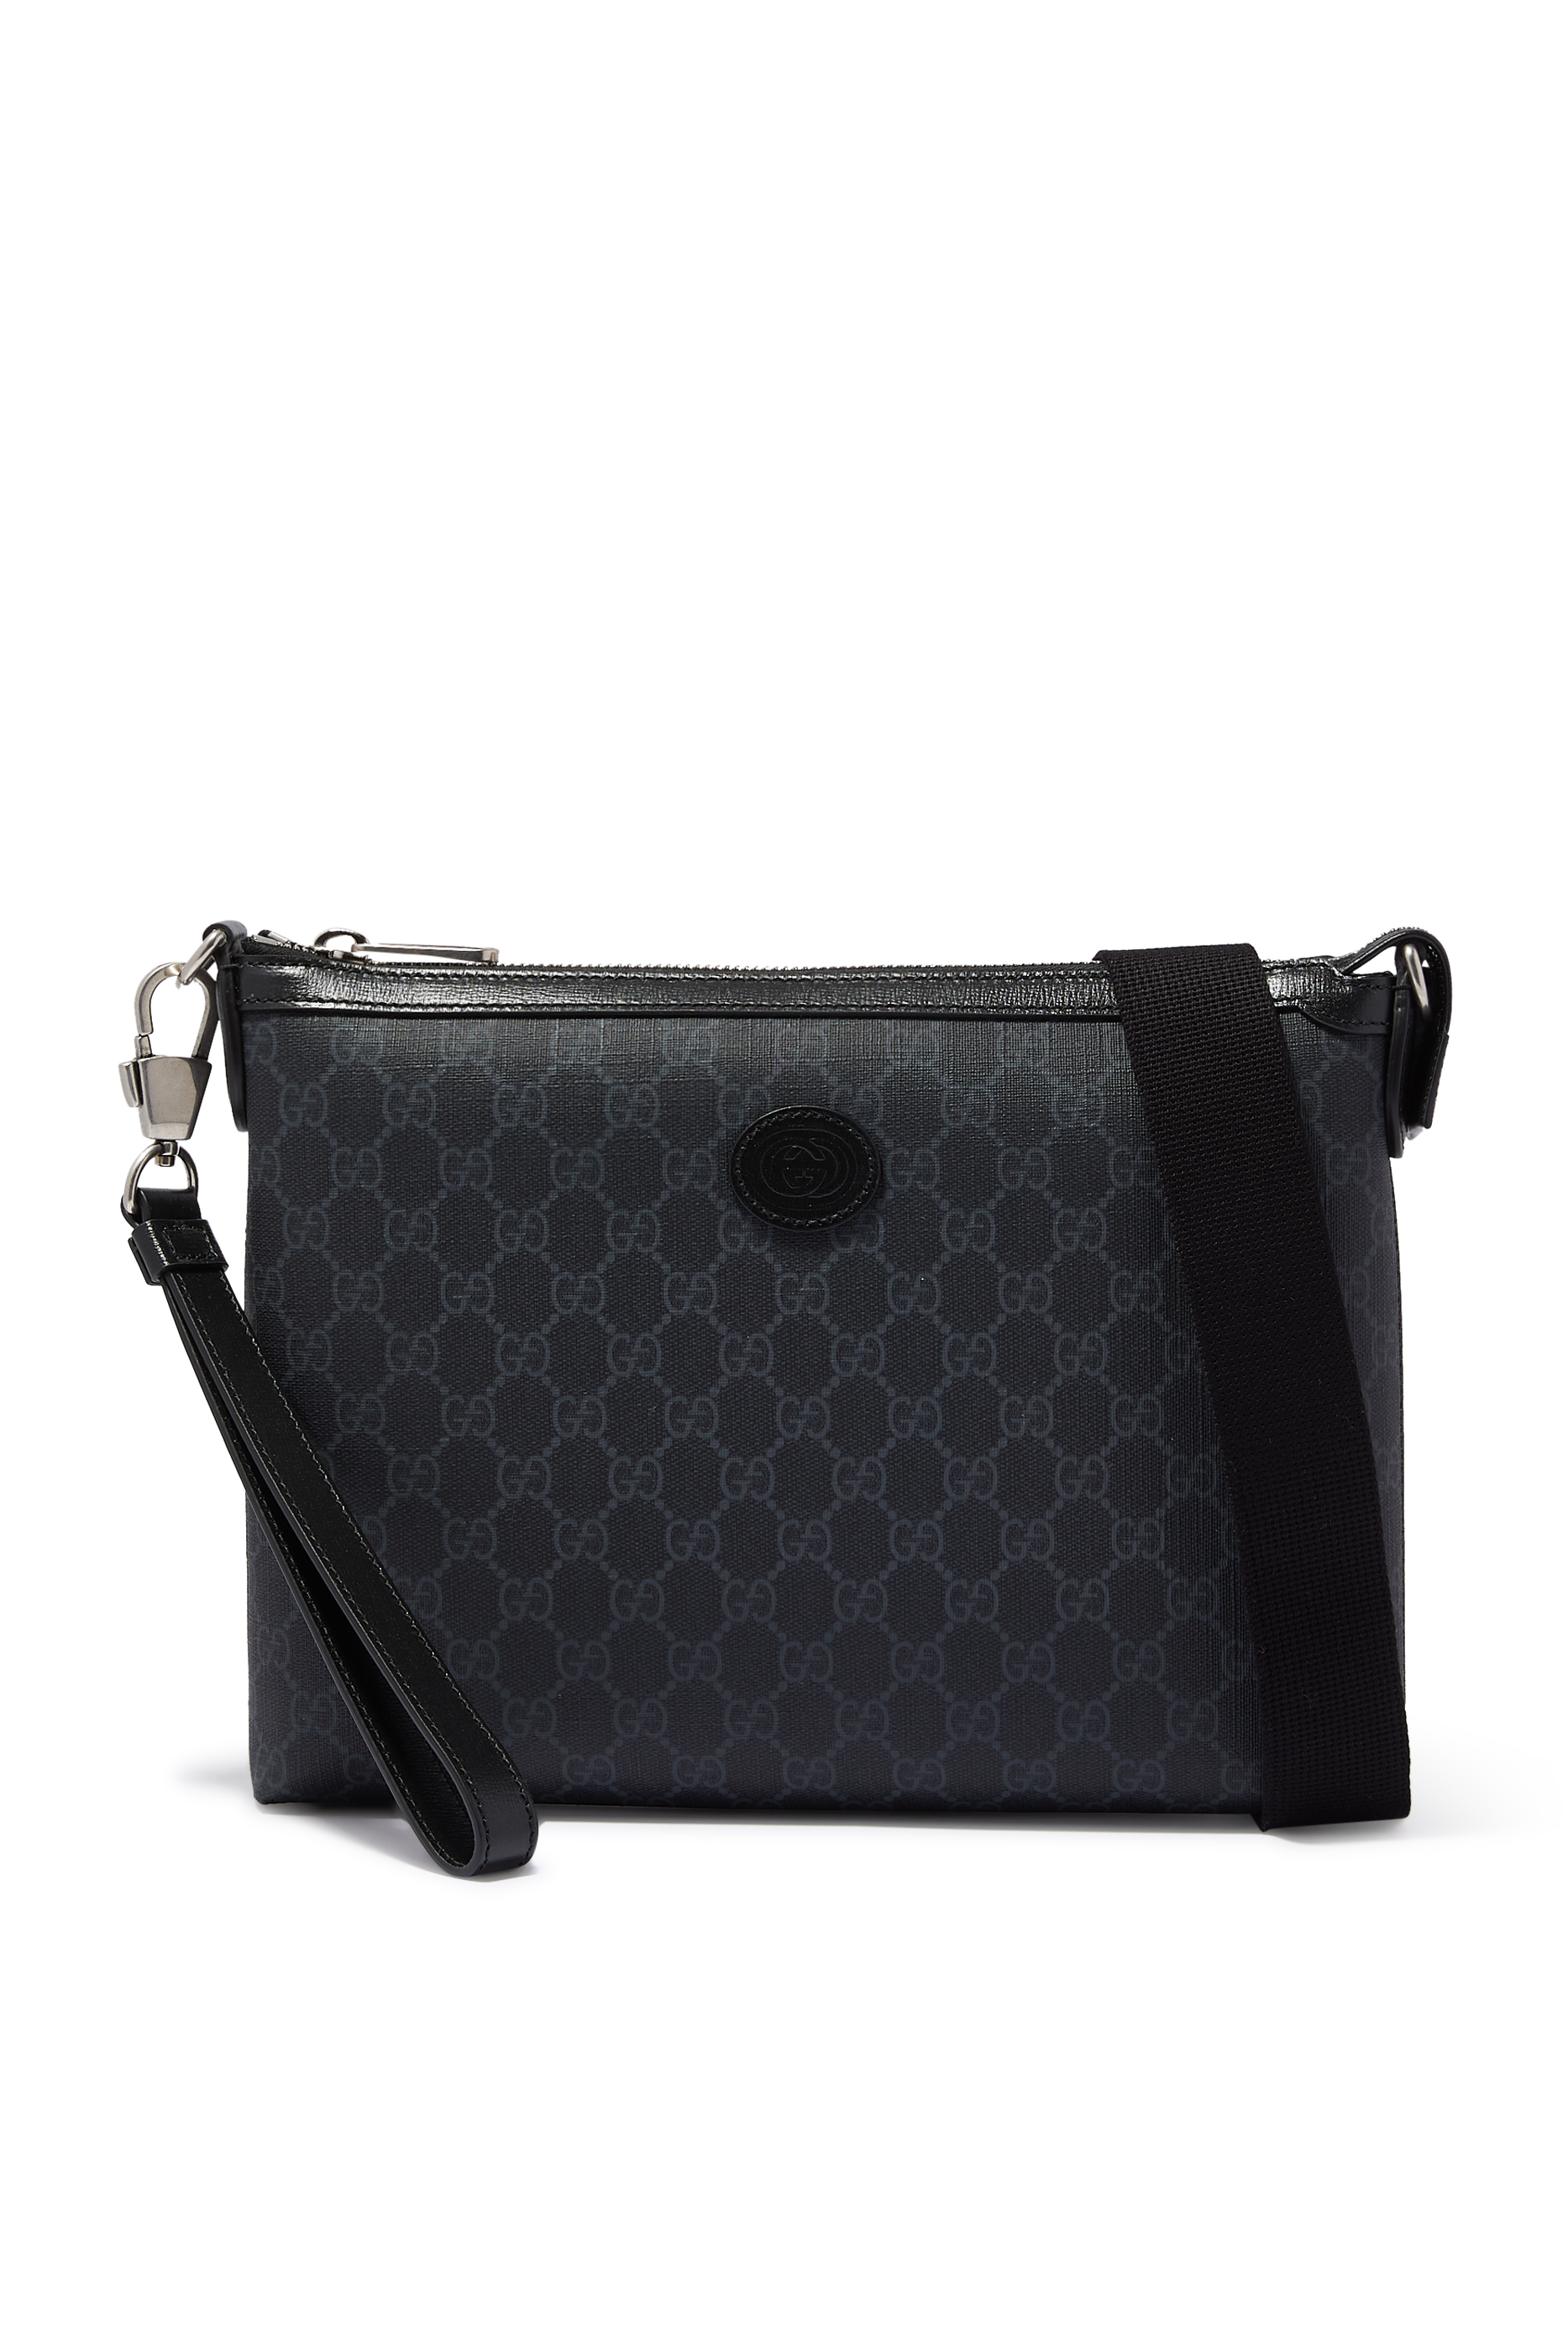 Buy Gucci Interlocking GG Messenger Bag for Mens | Bloomingdale's UAE